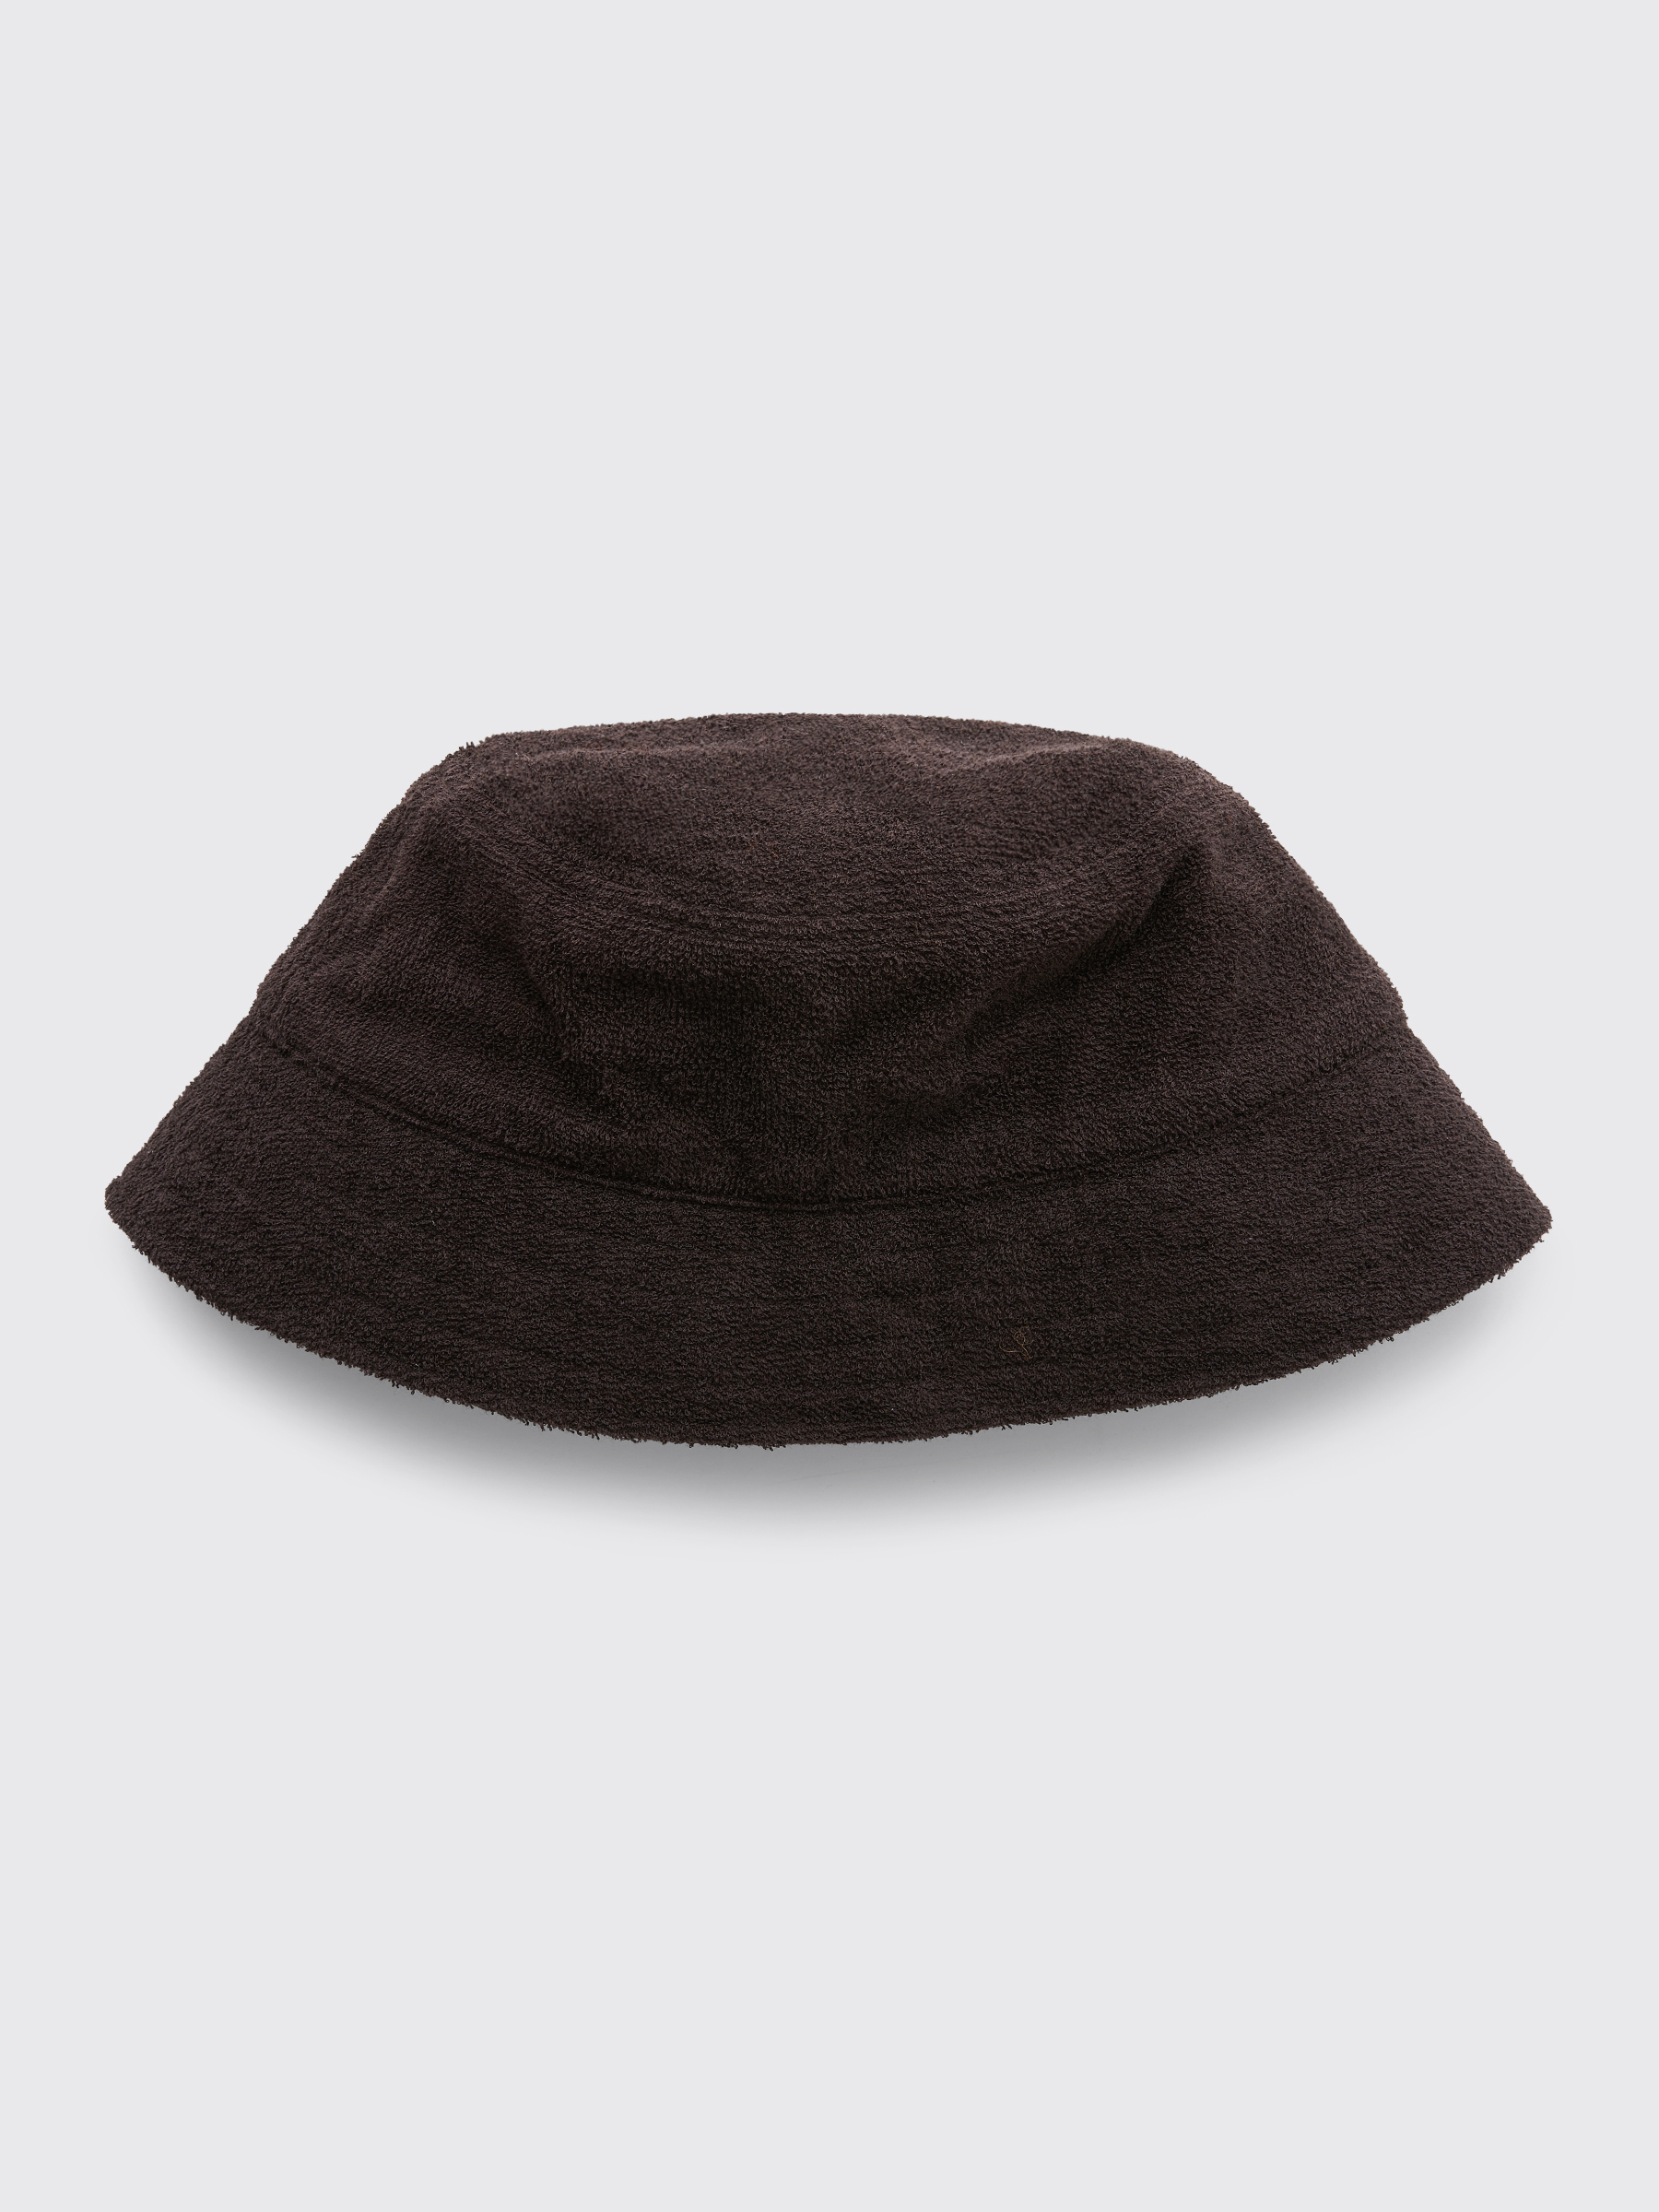 Très Bien - Auralee Terry Cloth Bucket Hat Brown Made By Kijima Takayuki